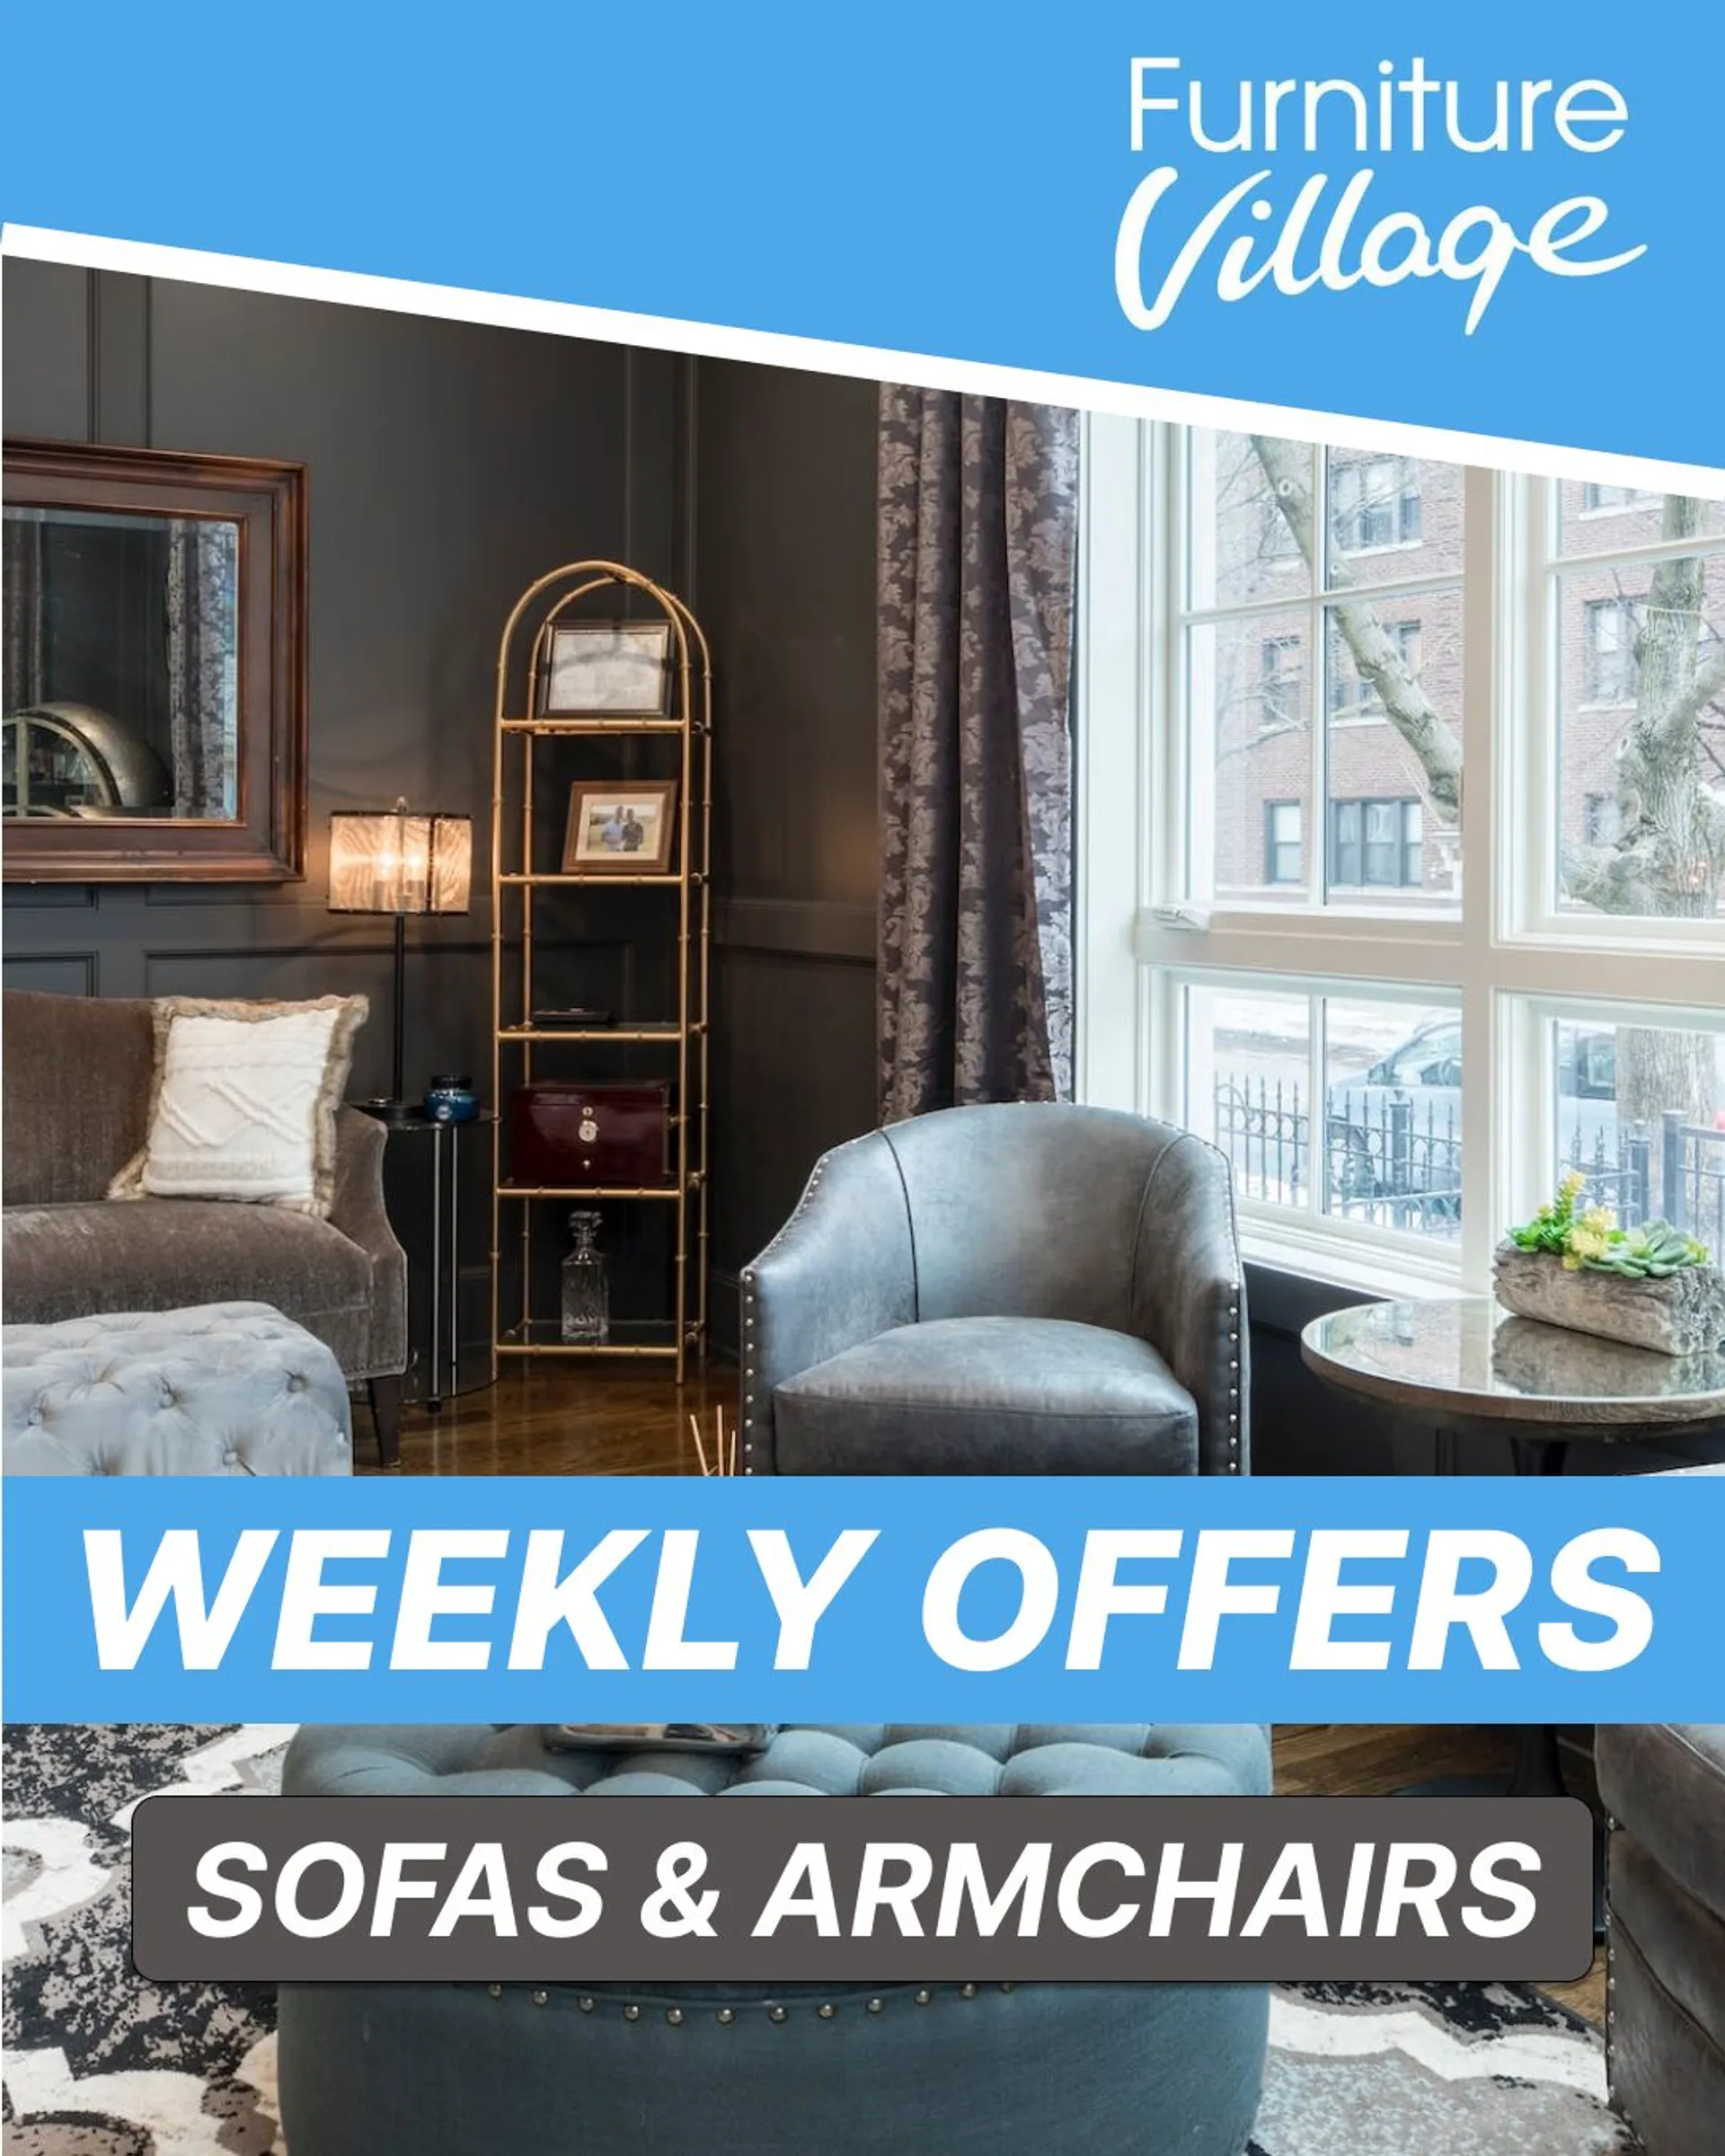 Furniture Village - Sofas & Armchair Offers